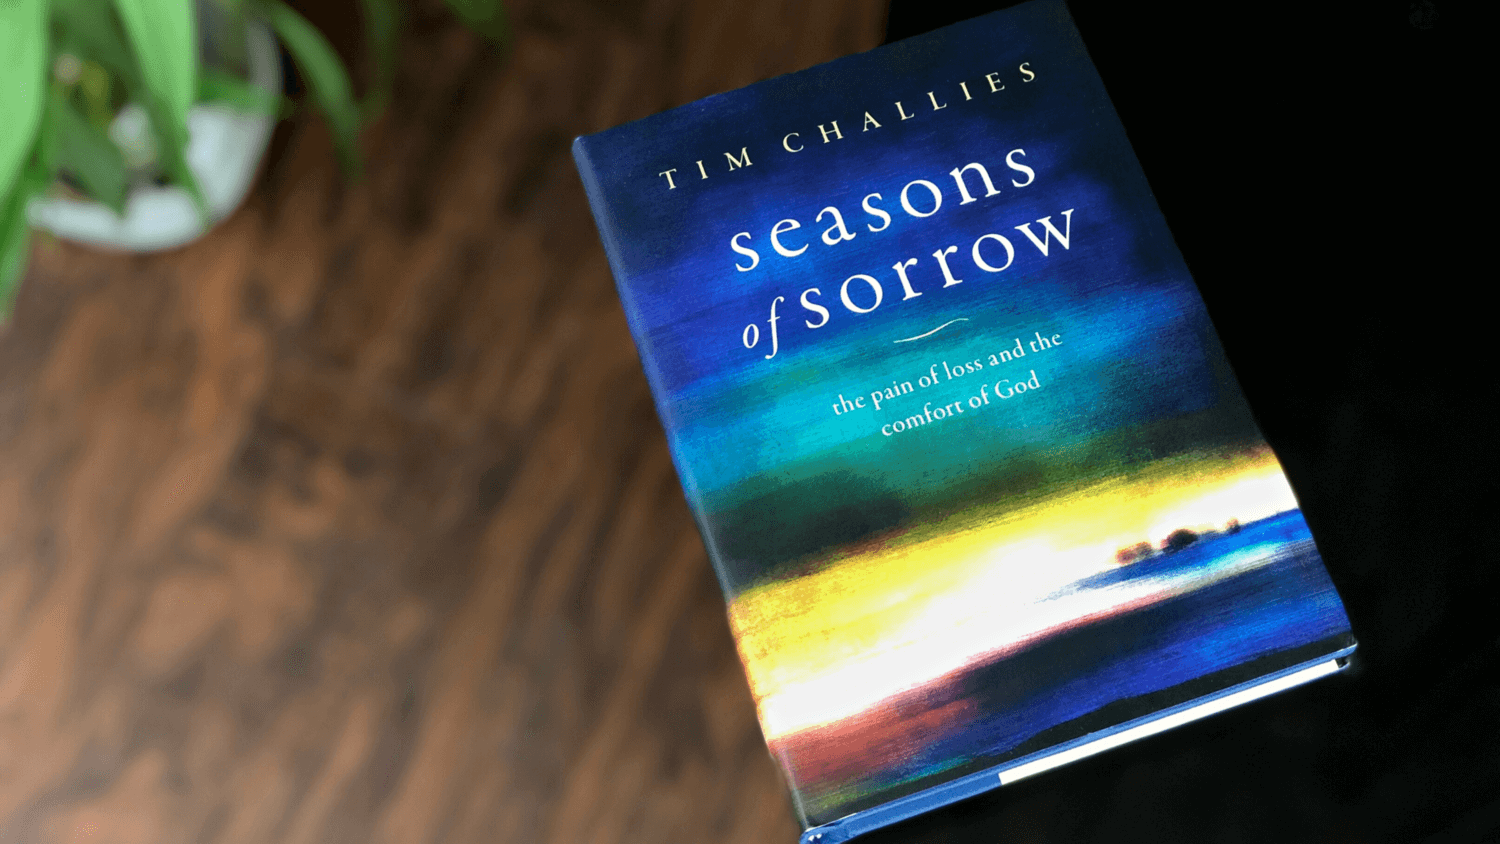 Morgenøvelser bøf i dag Everlasting Joy: A Book Review of “Seasons of Sorrow” - SOLA Network